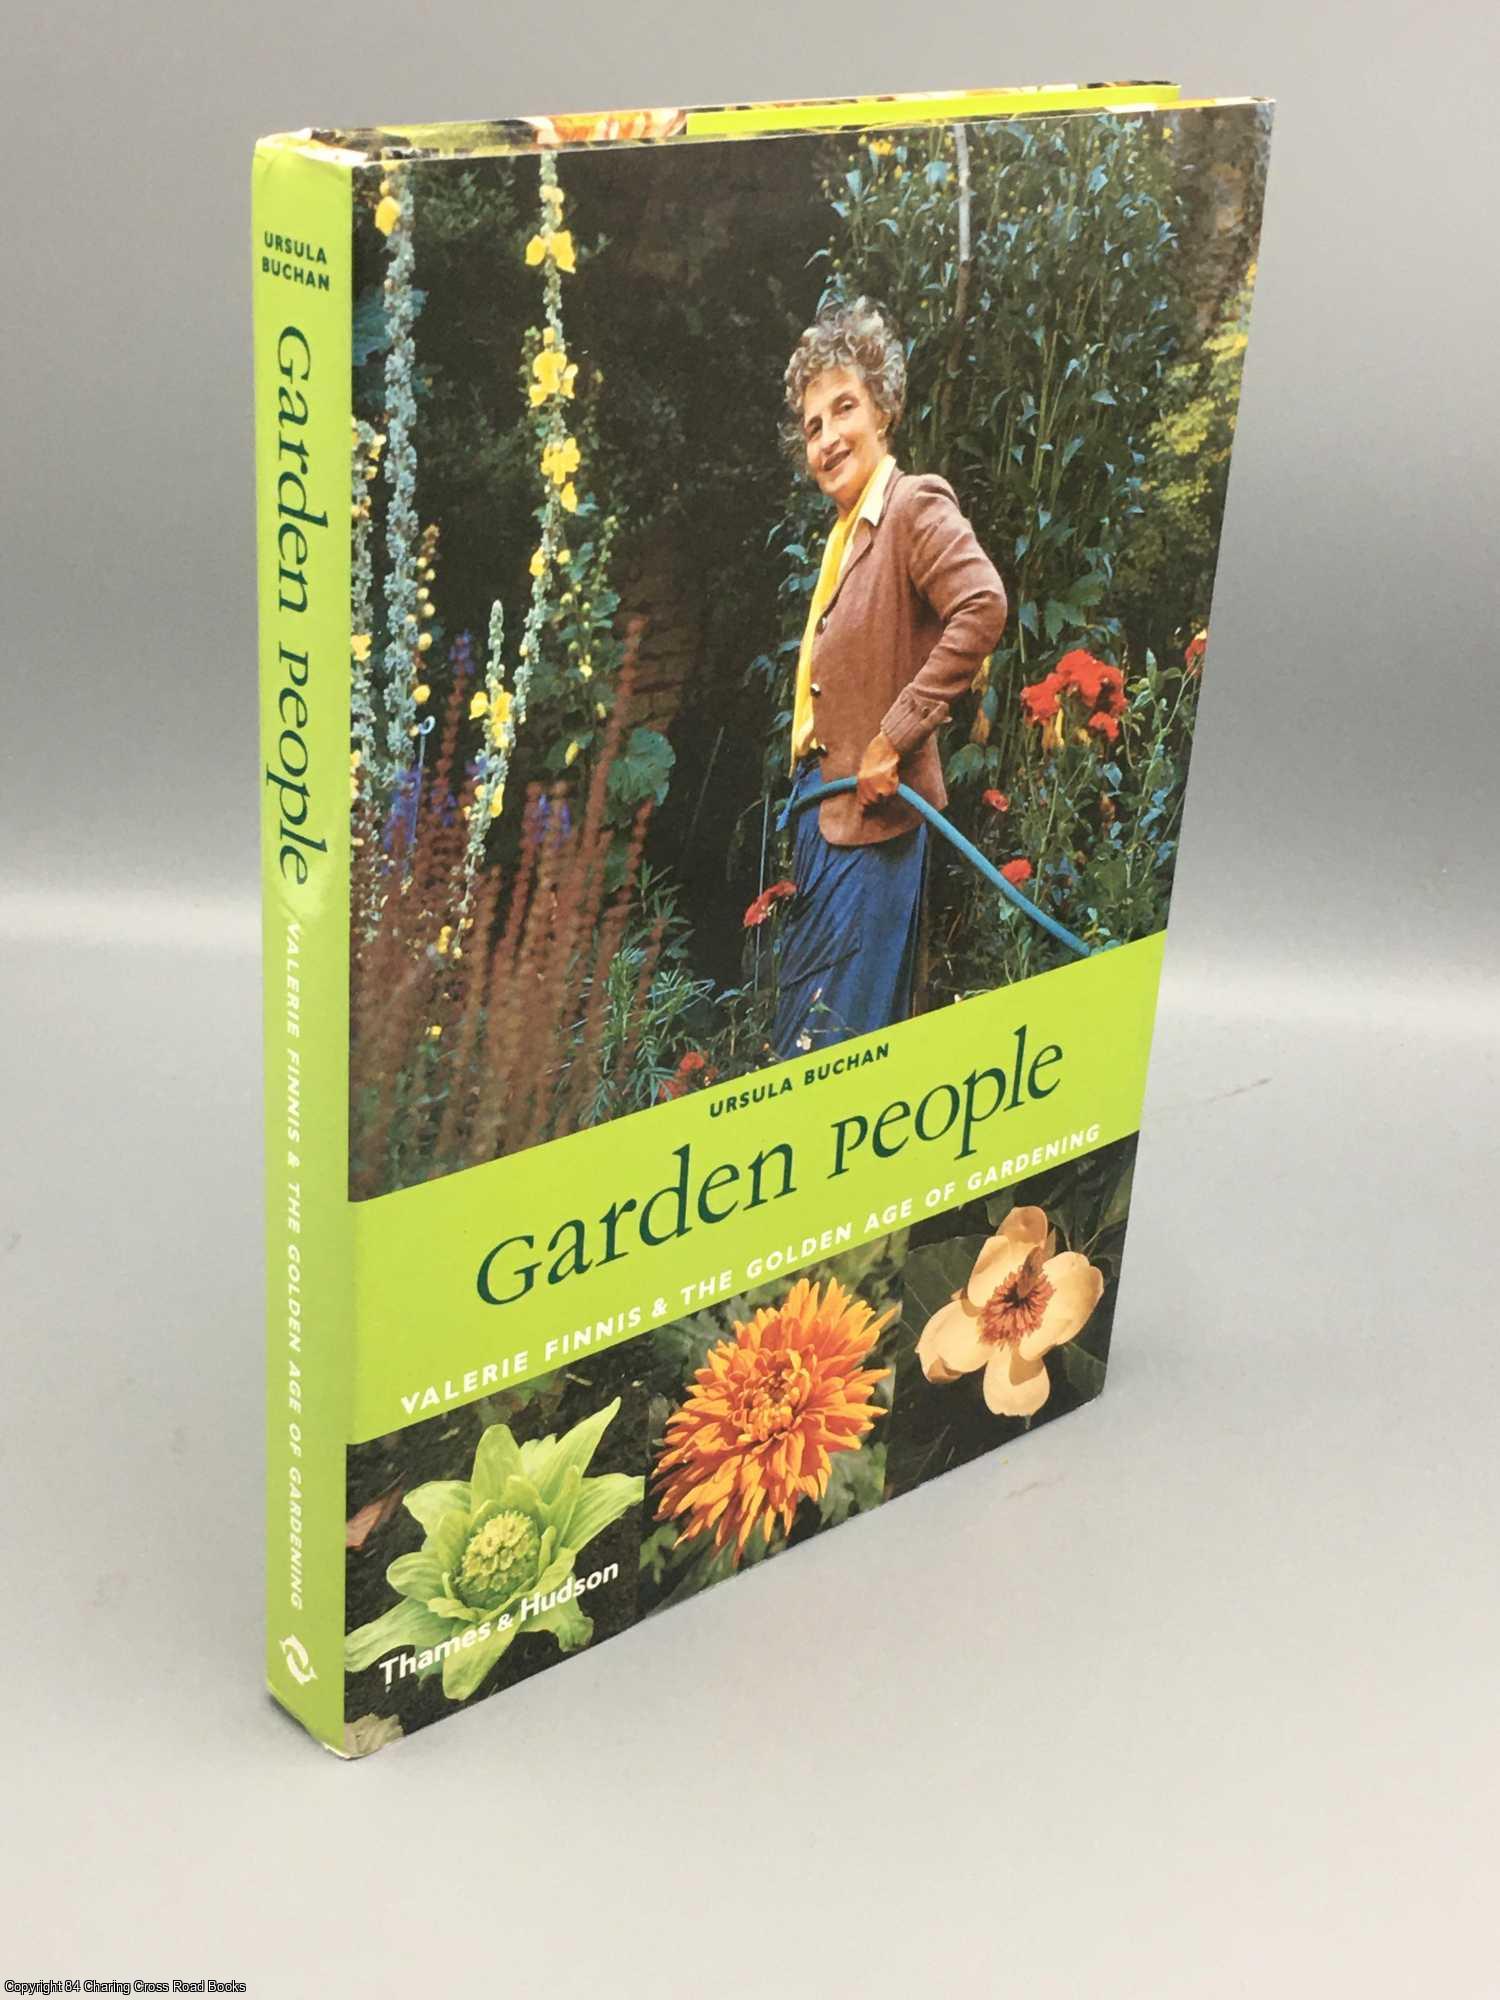 Buchan, Ursula - Garden People: Valerie Finnis & the golden age of gardening